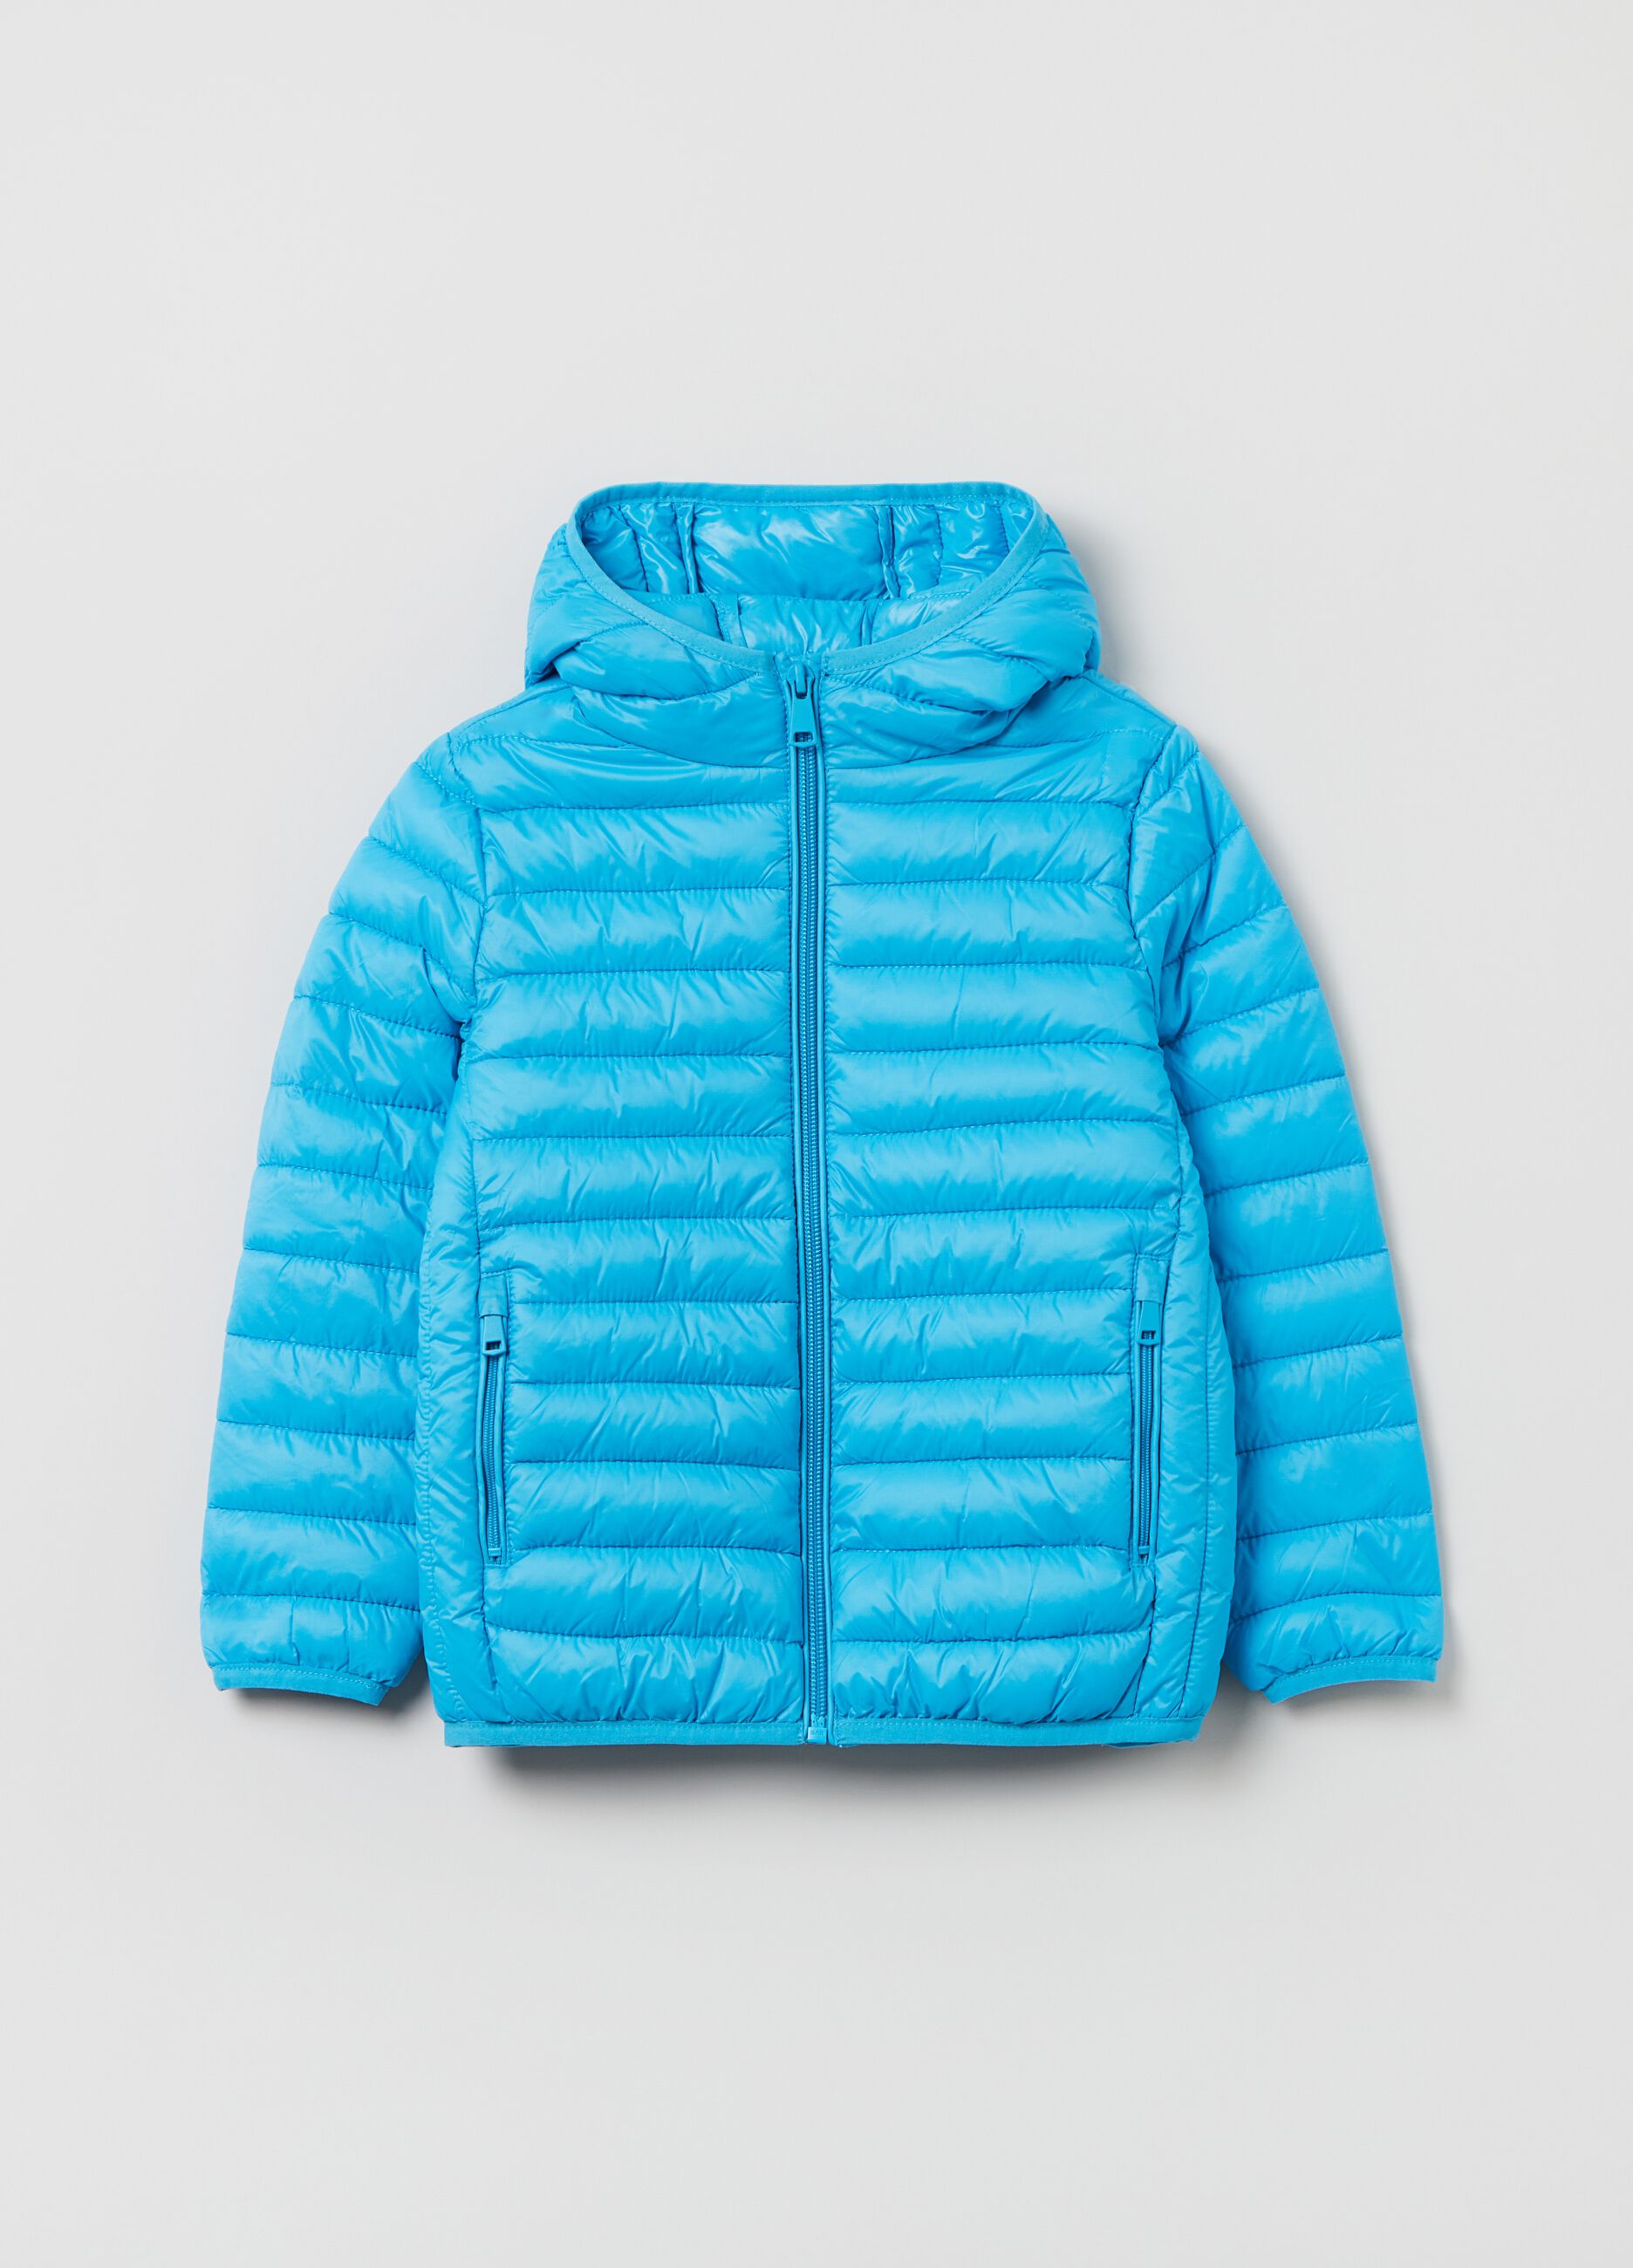 Full-zip ultralight down jacket with hood